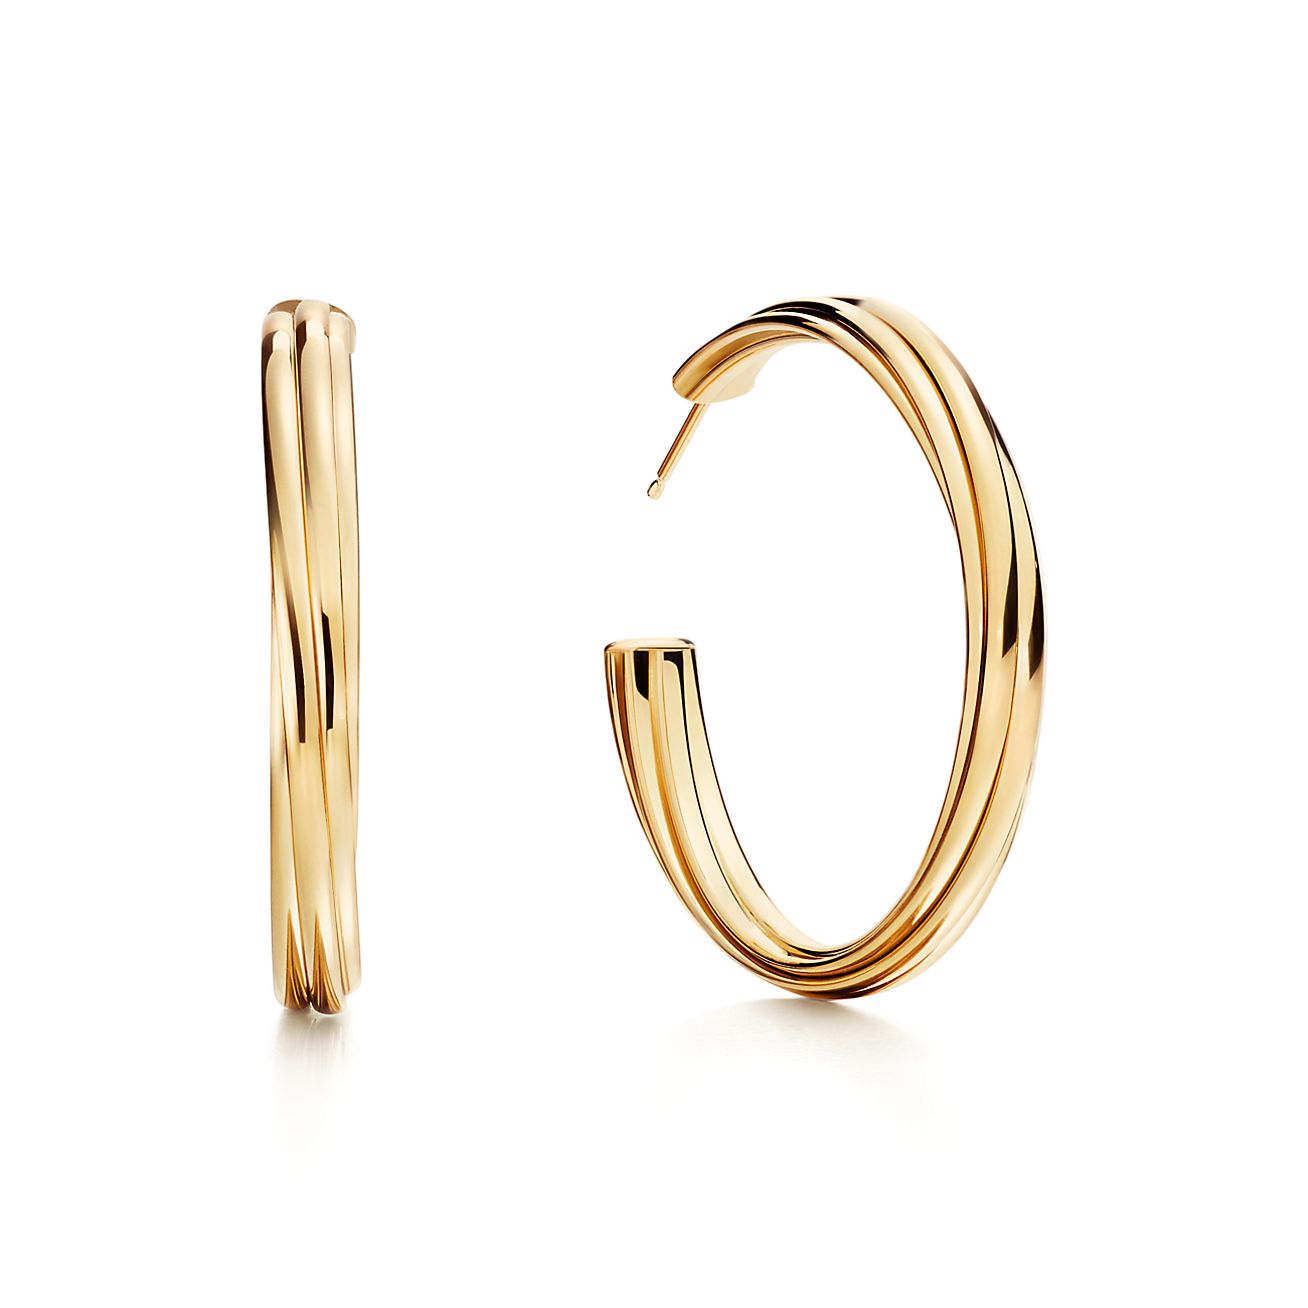 Melody hoop earrings in 18k gold, large 